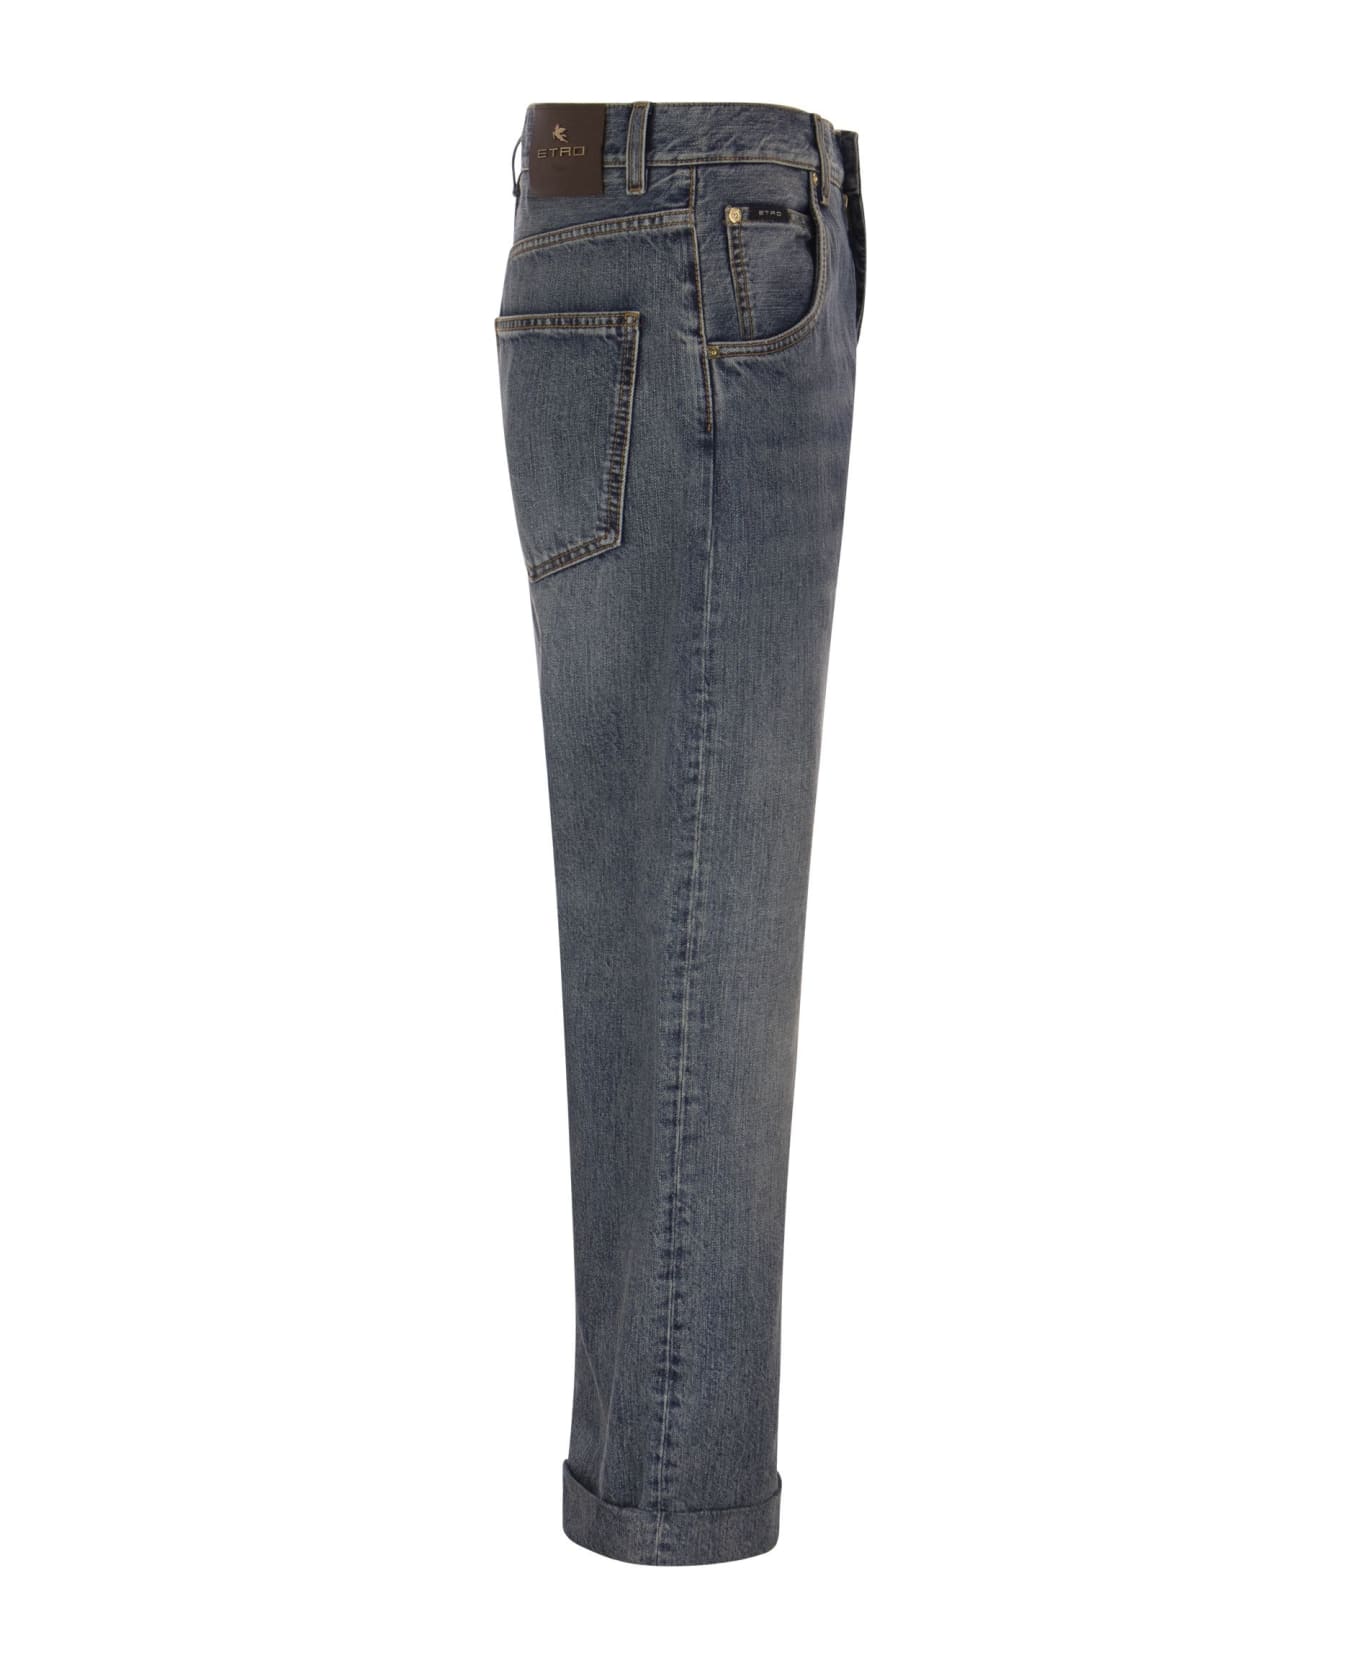 Etro Easy-fit Five-pocket Jeans - Denim Blue